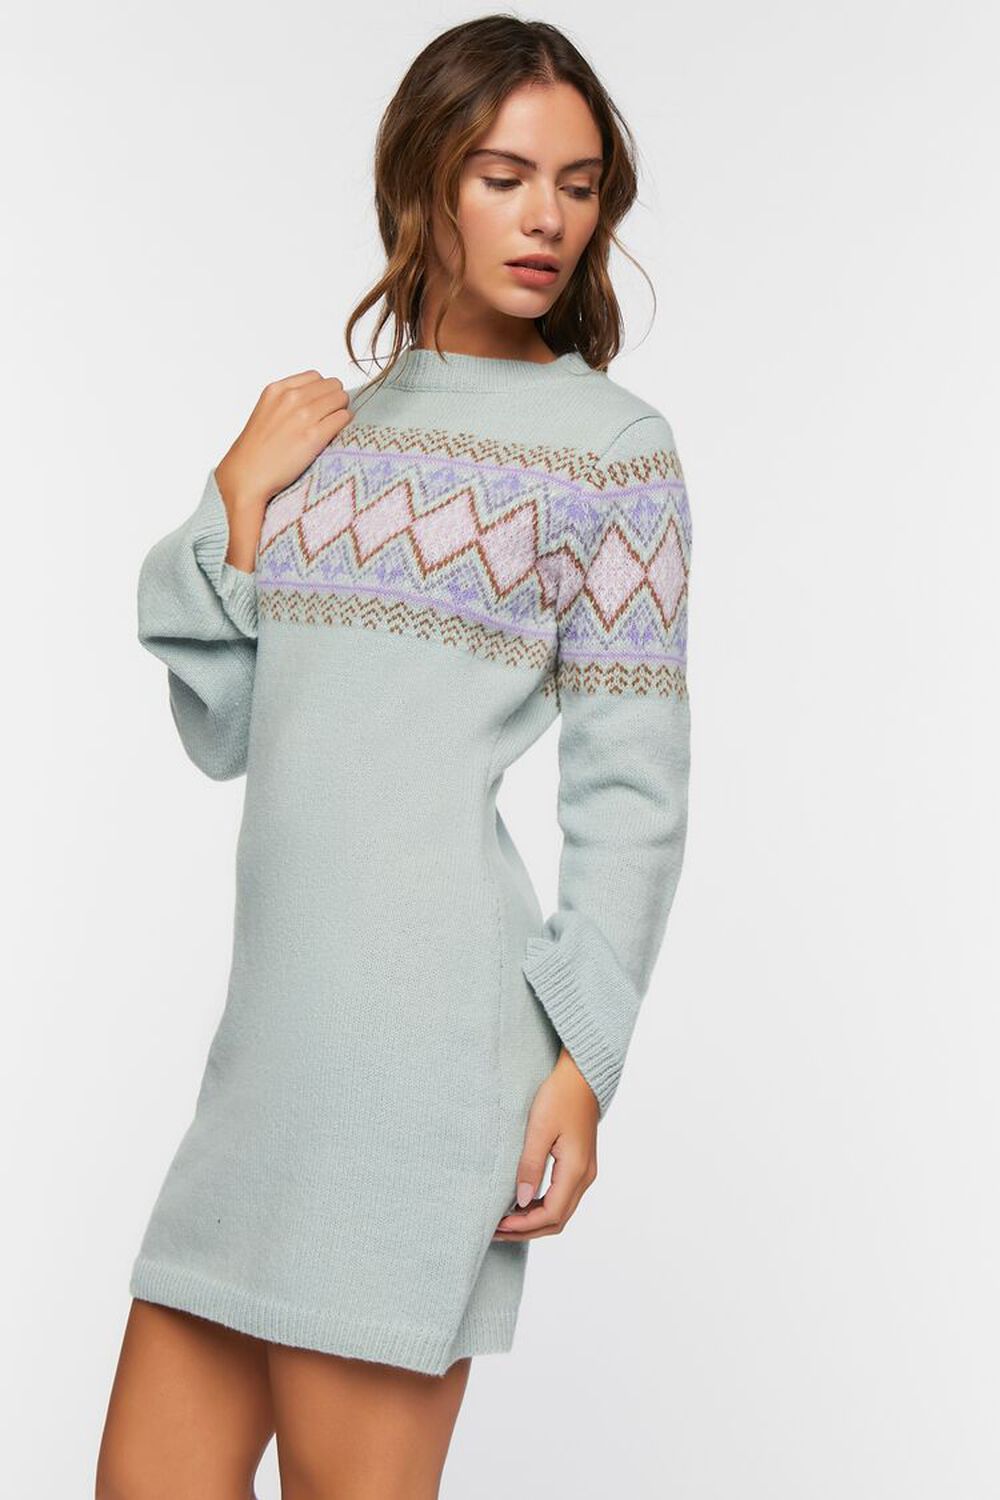 LIGHT BLUE/MULTI Fair Isle Sweater Mini Dress, image 2